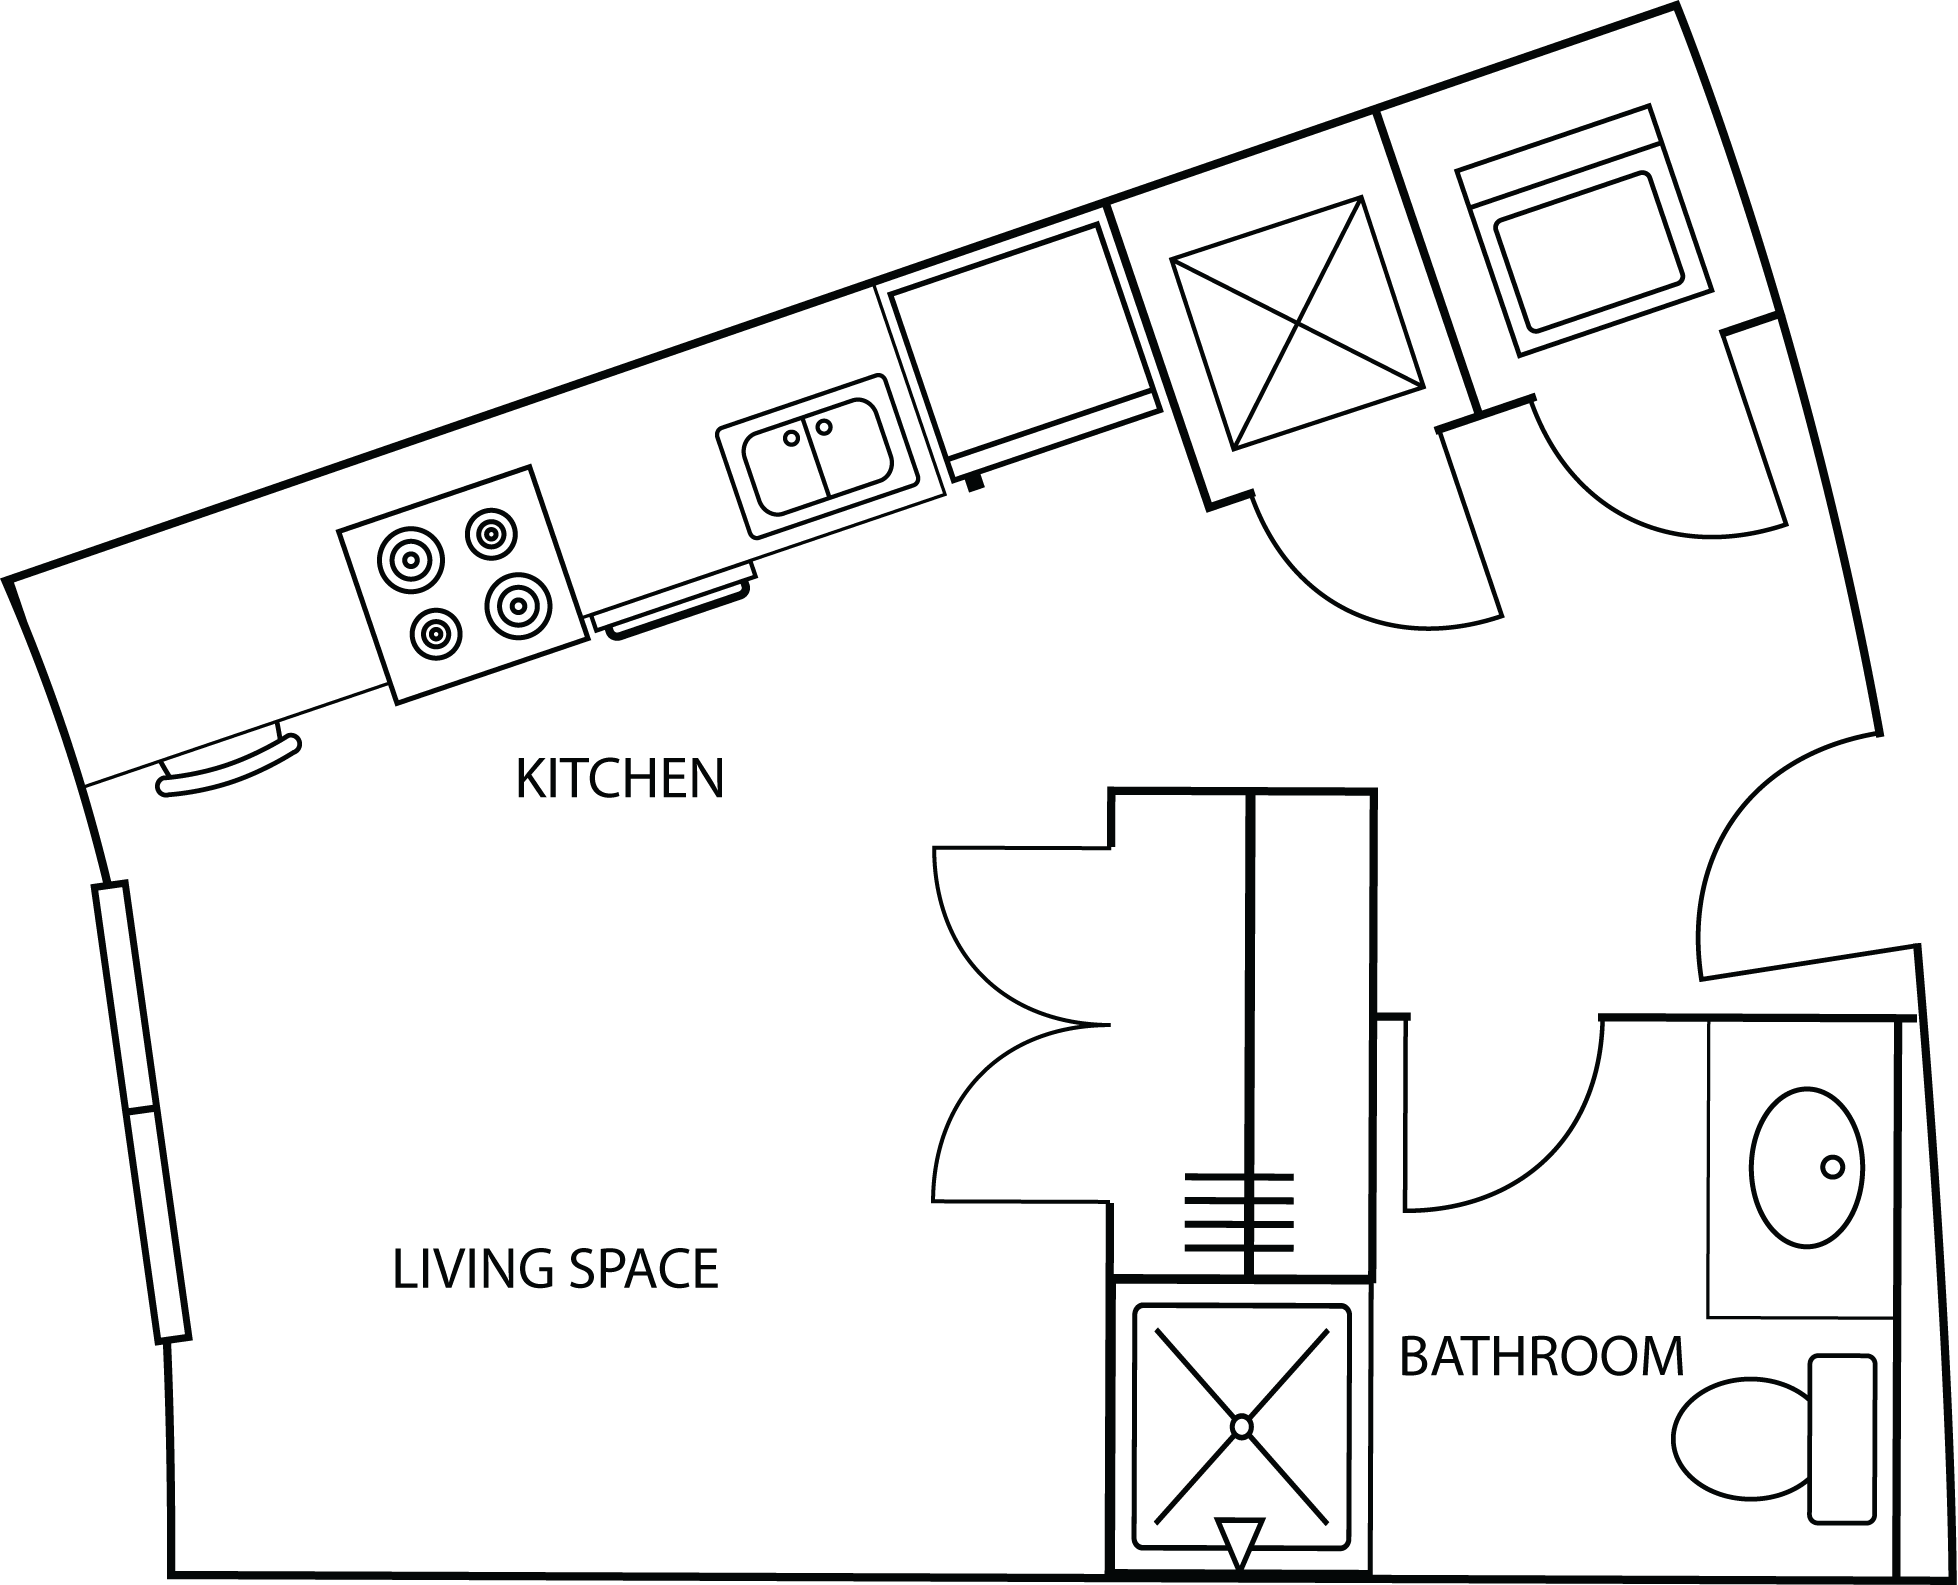 Illustration of Aspire's Endeavour Floor plan, a studio apartment for 1 Person